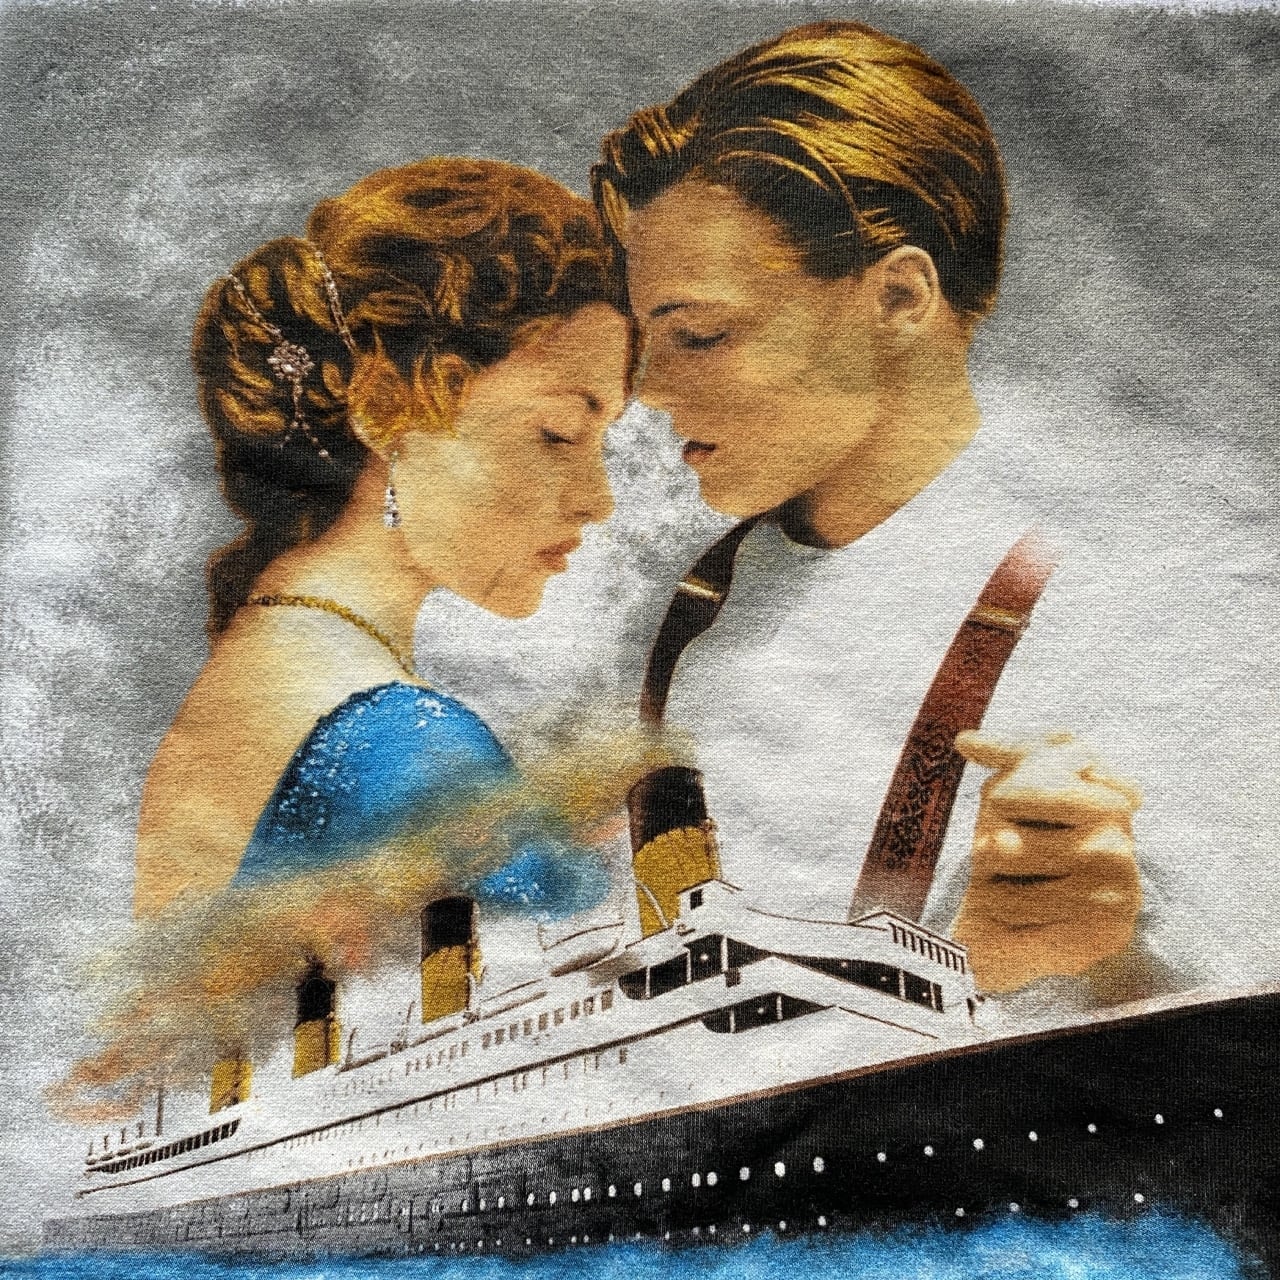 Titanic 1998 Movie Promo Tee